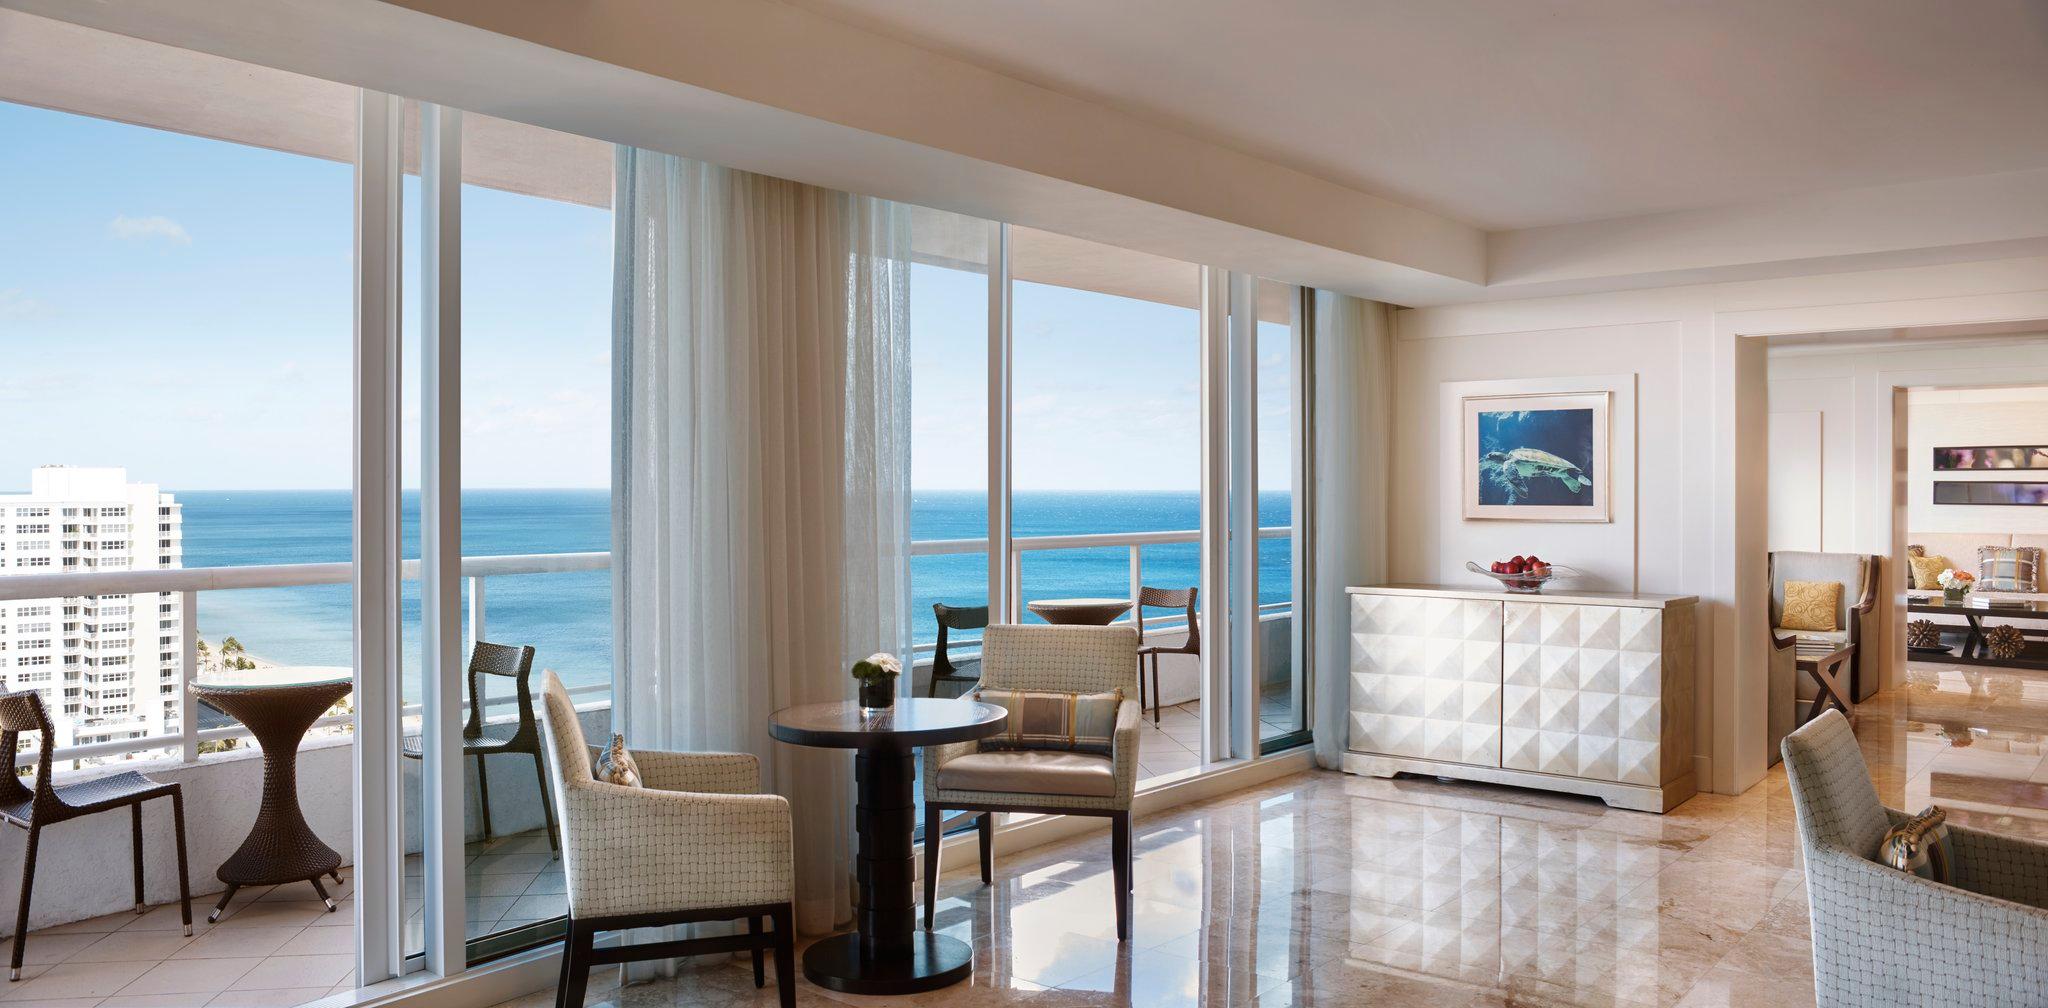 The Ritz-Carlton Fort Lauderdale image 1